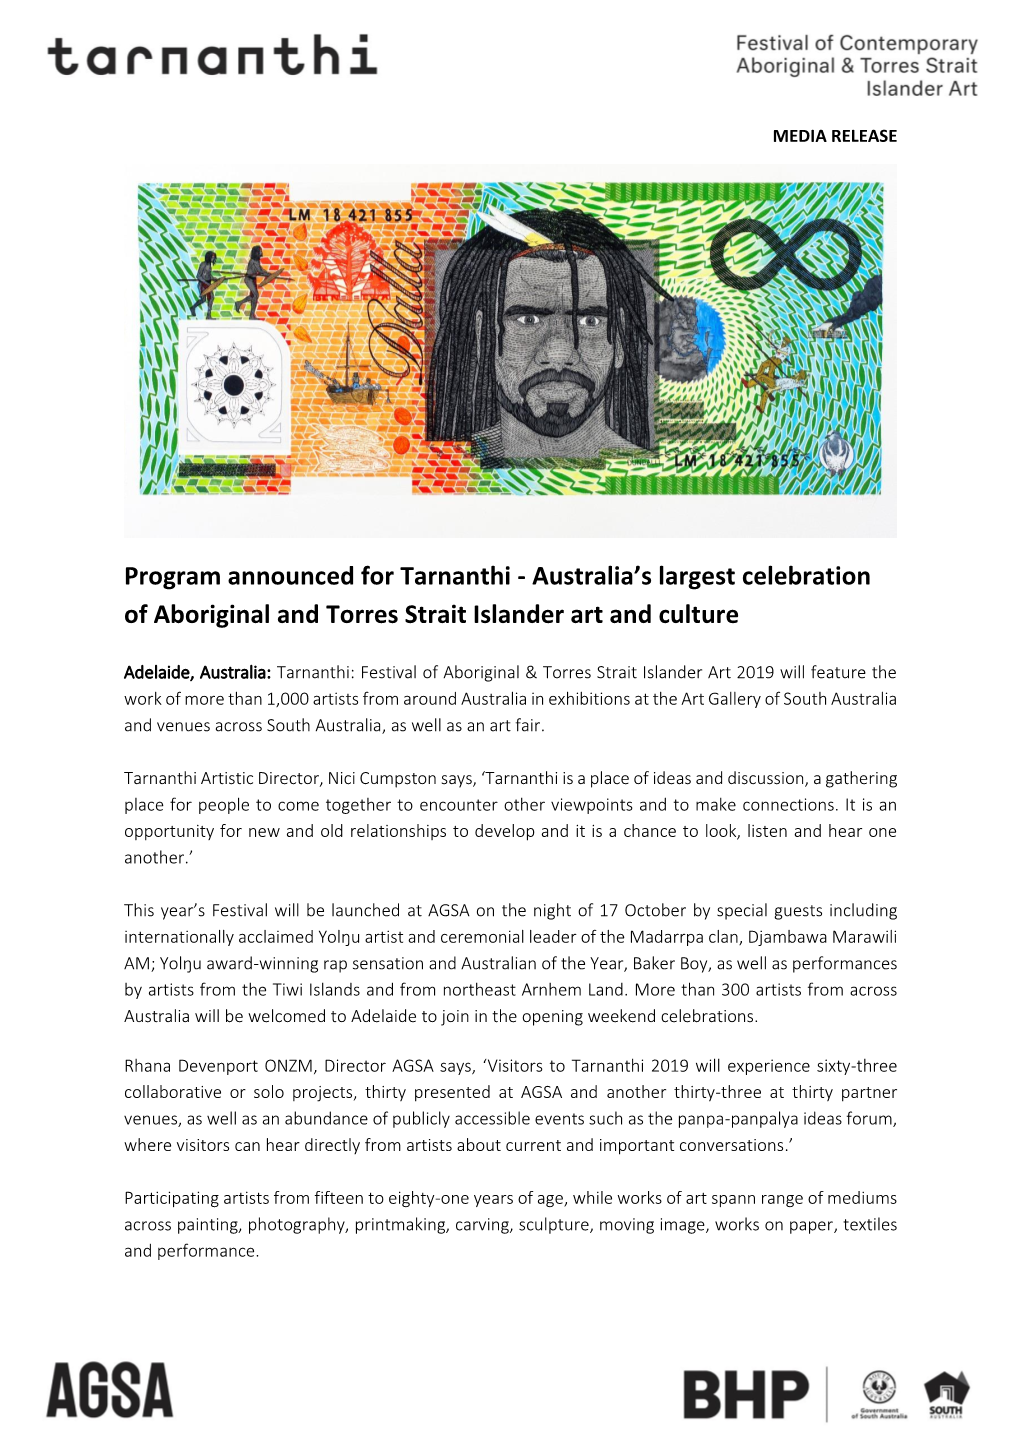 Program Announced for Tarnanthi - Australia’S Largest Celebration of Aboriginal and Torres Strait Islander Art and Culture